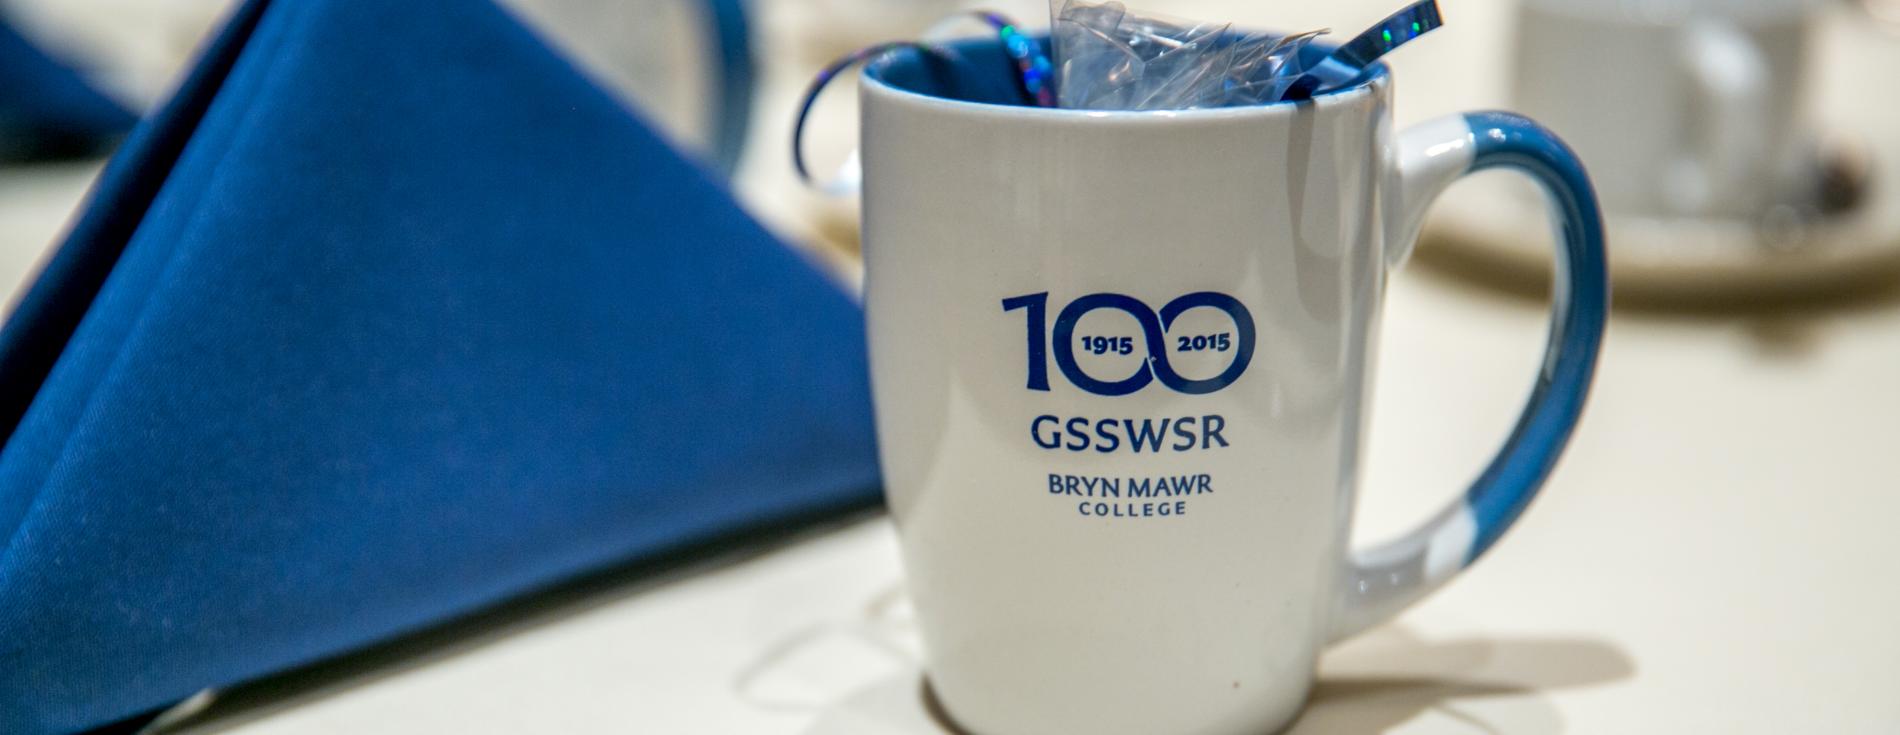 GSSWSR's 100th birthday